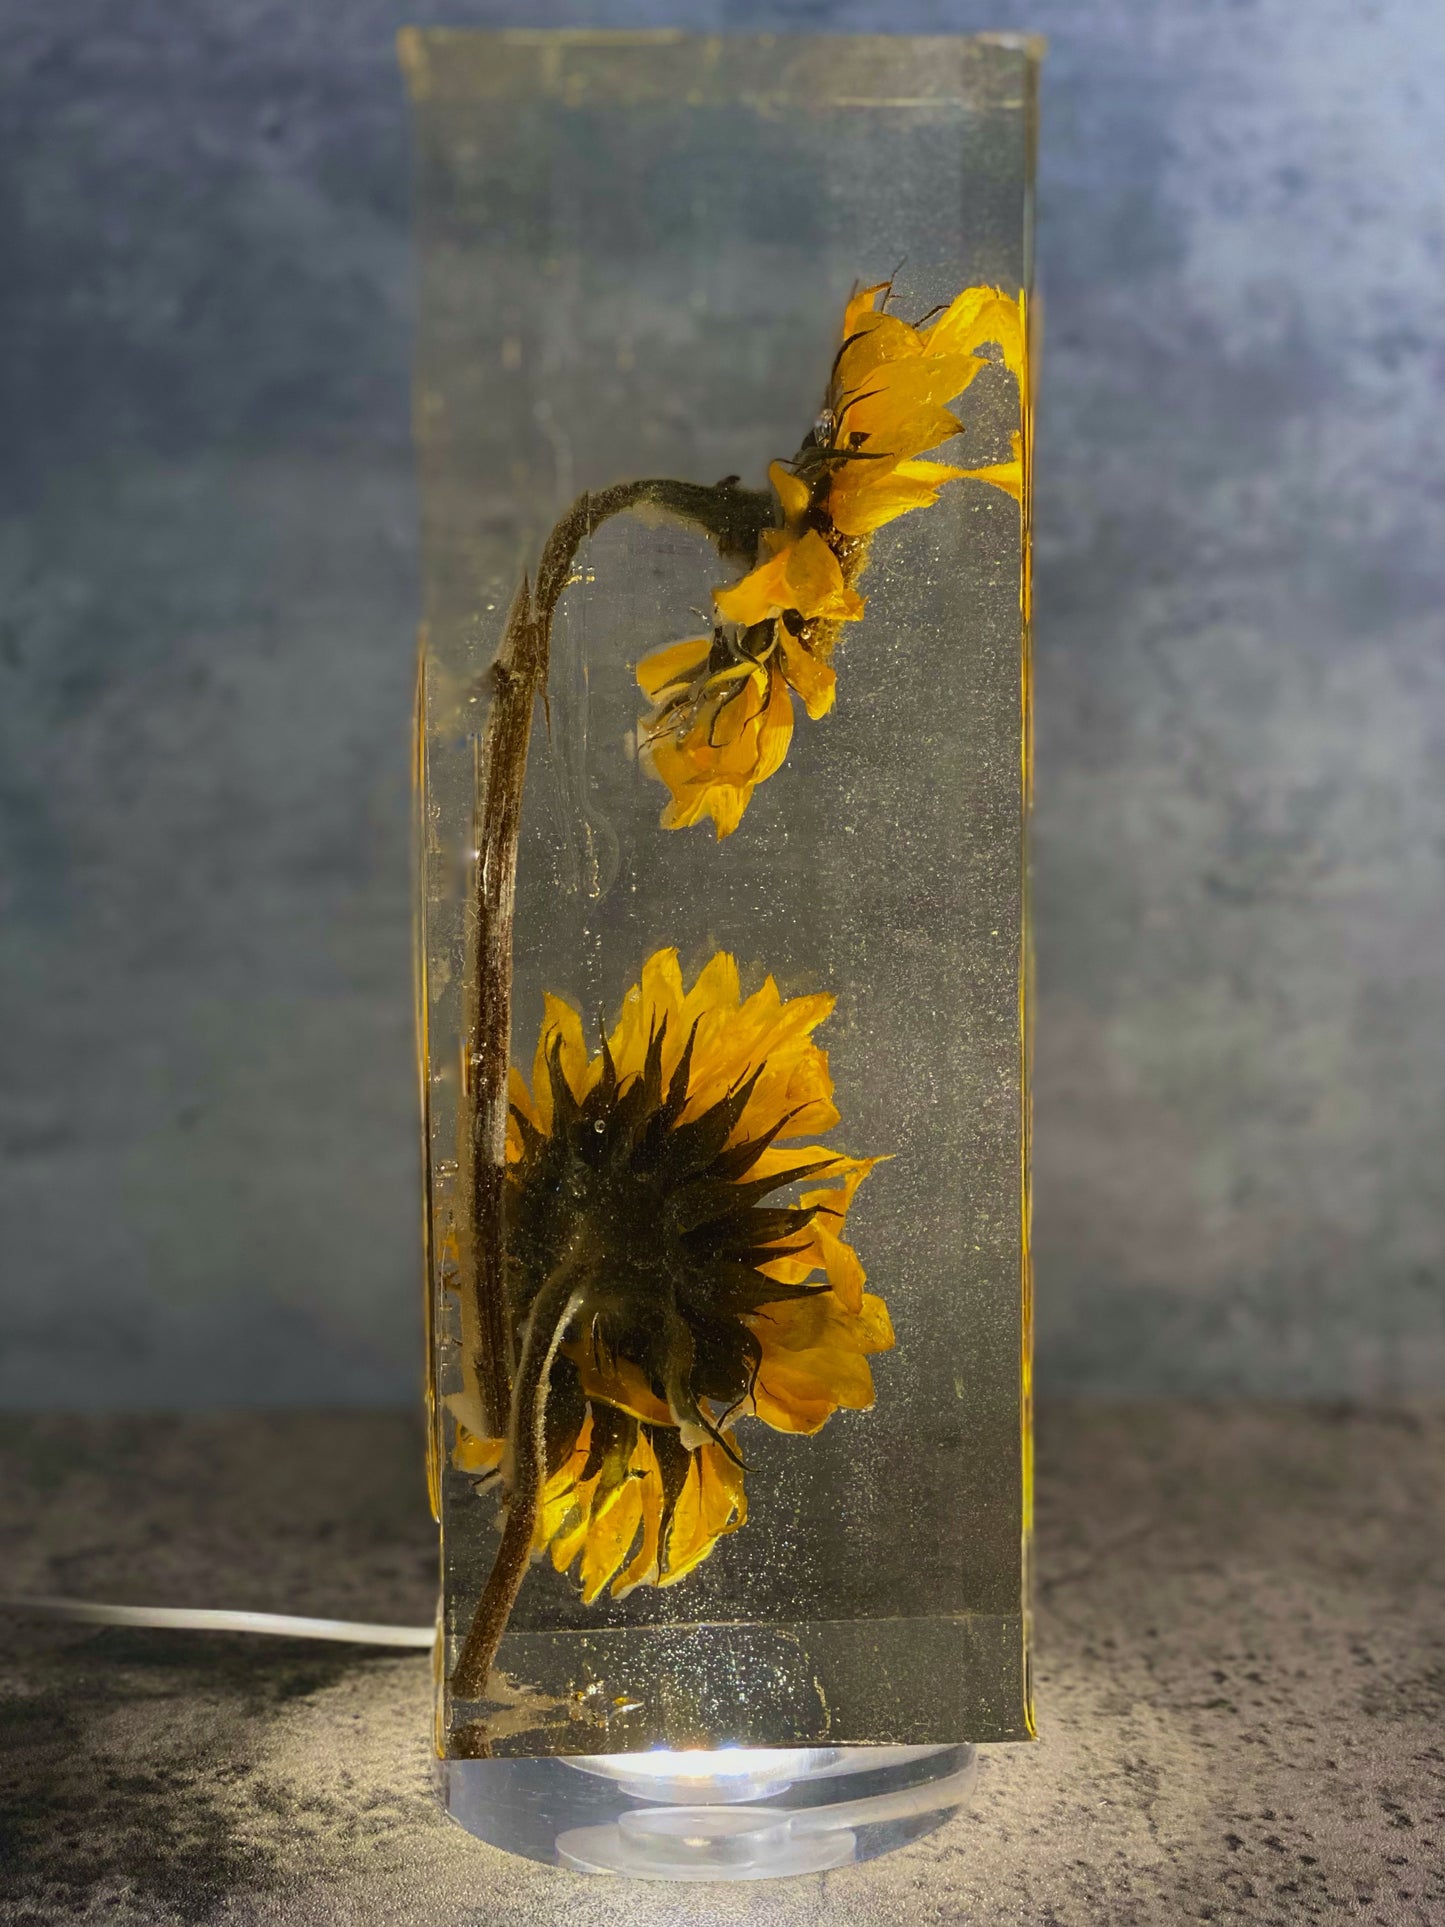 Sunflower Lamp